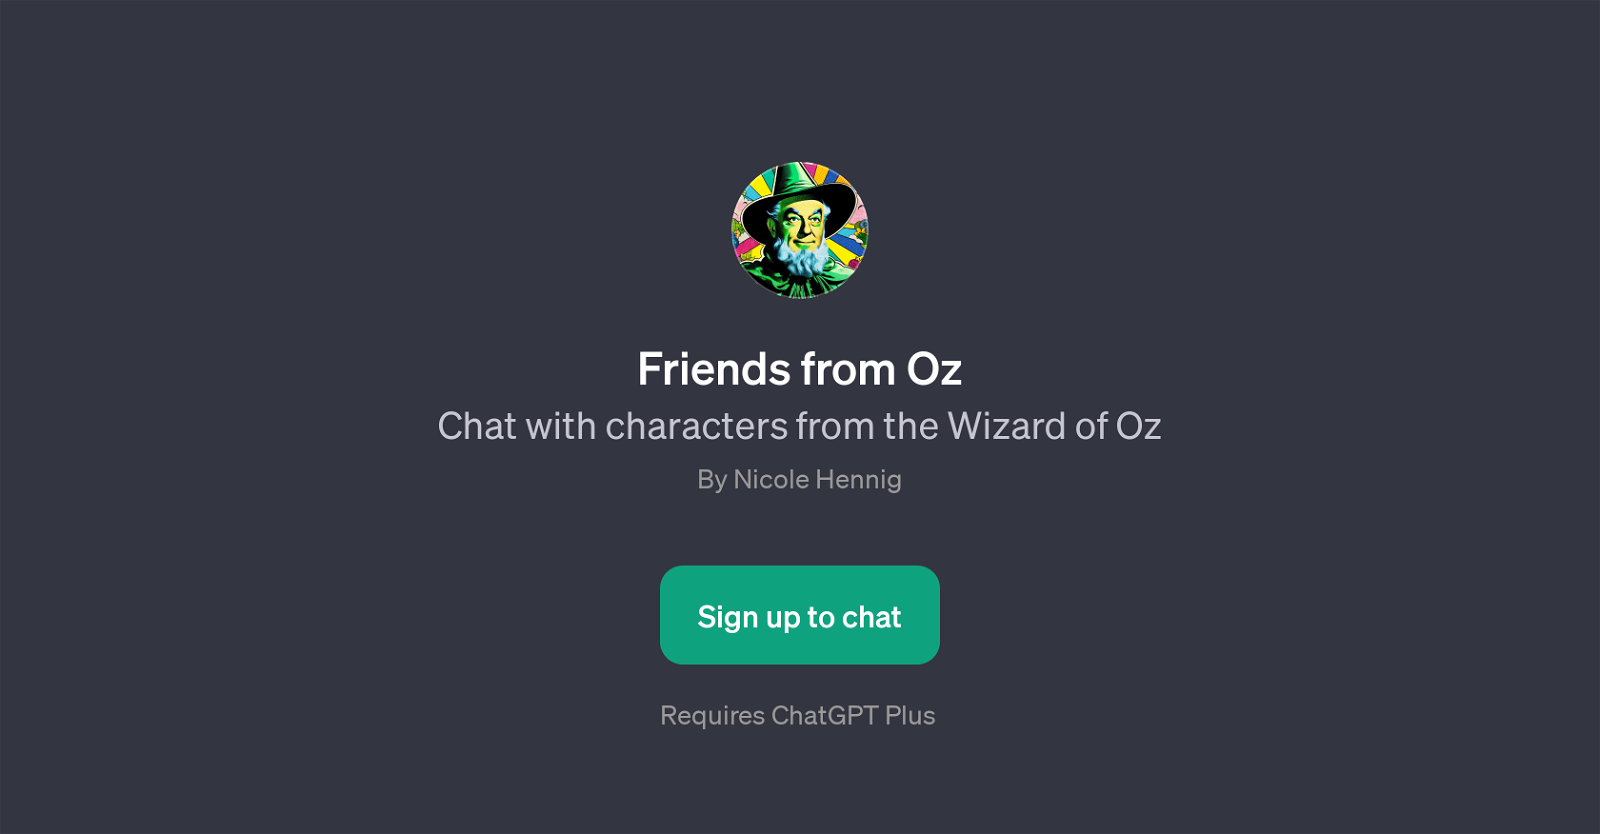 Friends from Oz website